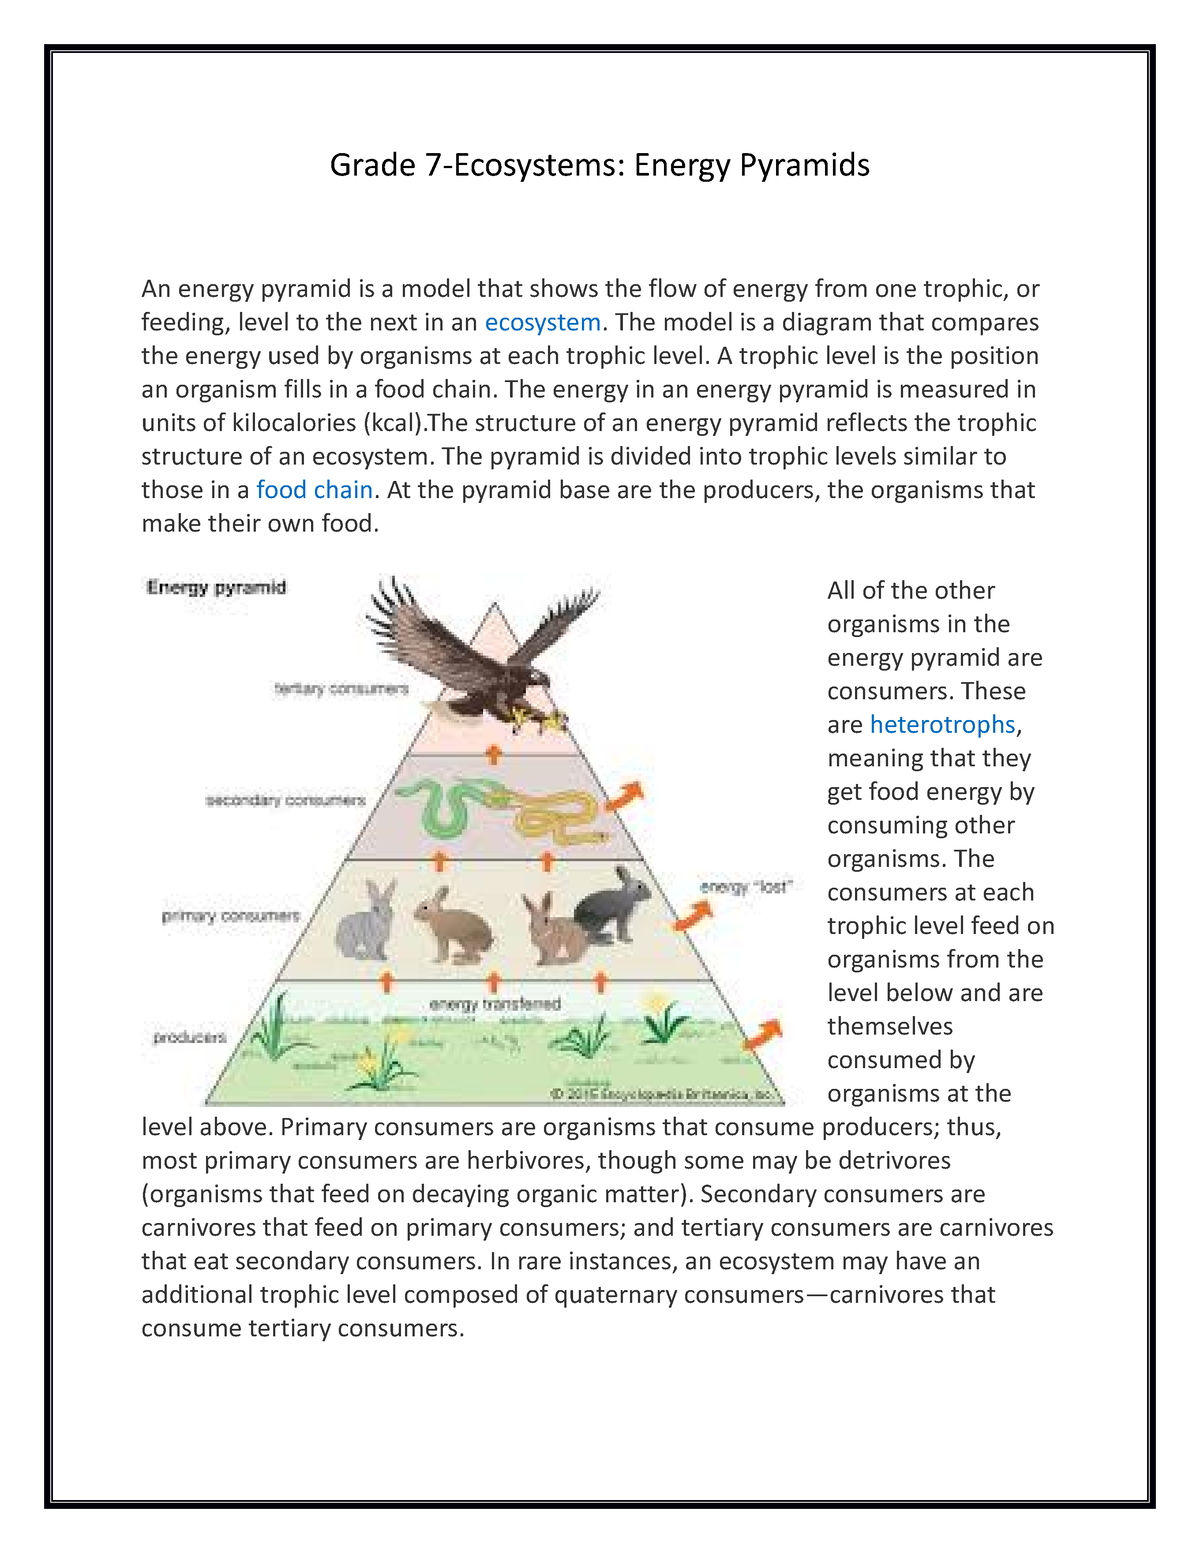 Gr. 7 Energy Pyramids reading comp. worksheet - Grade 7-Ecosystems ...